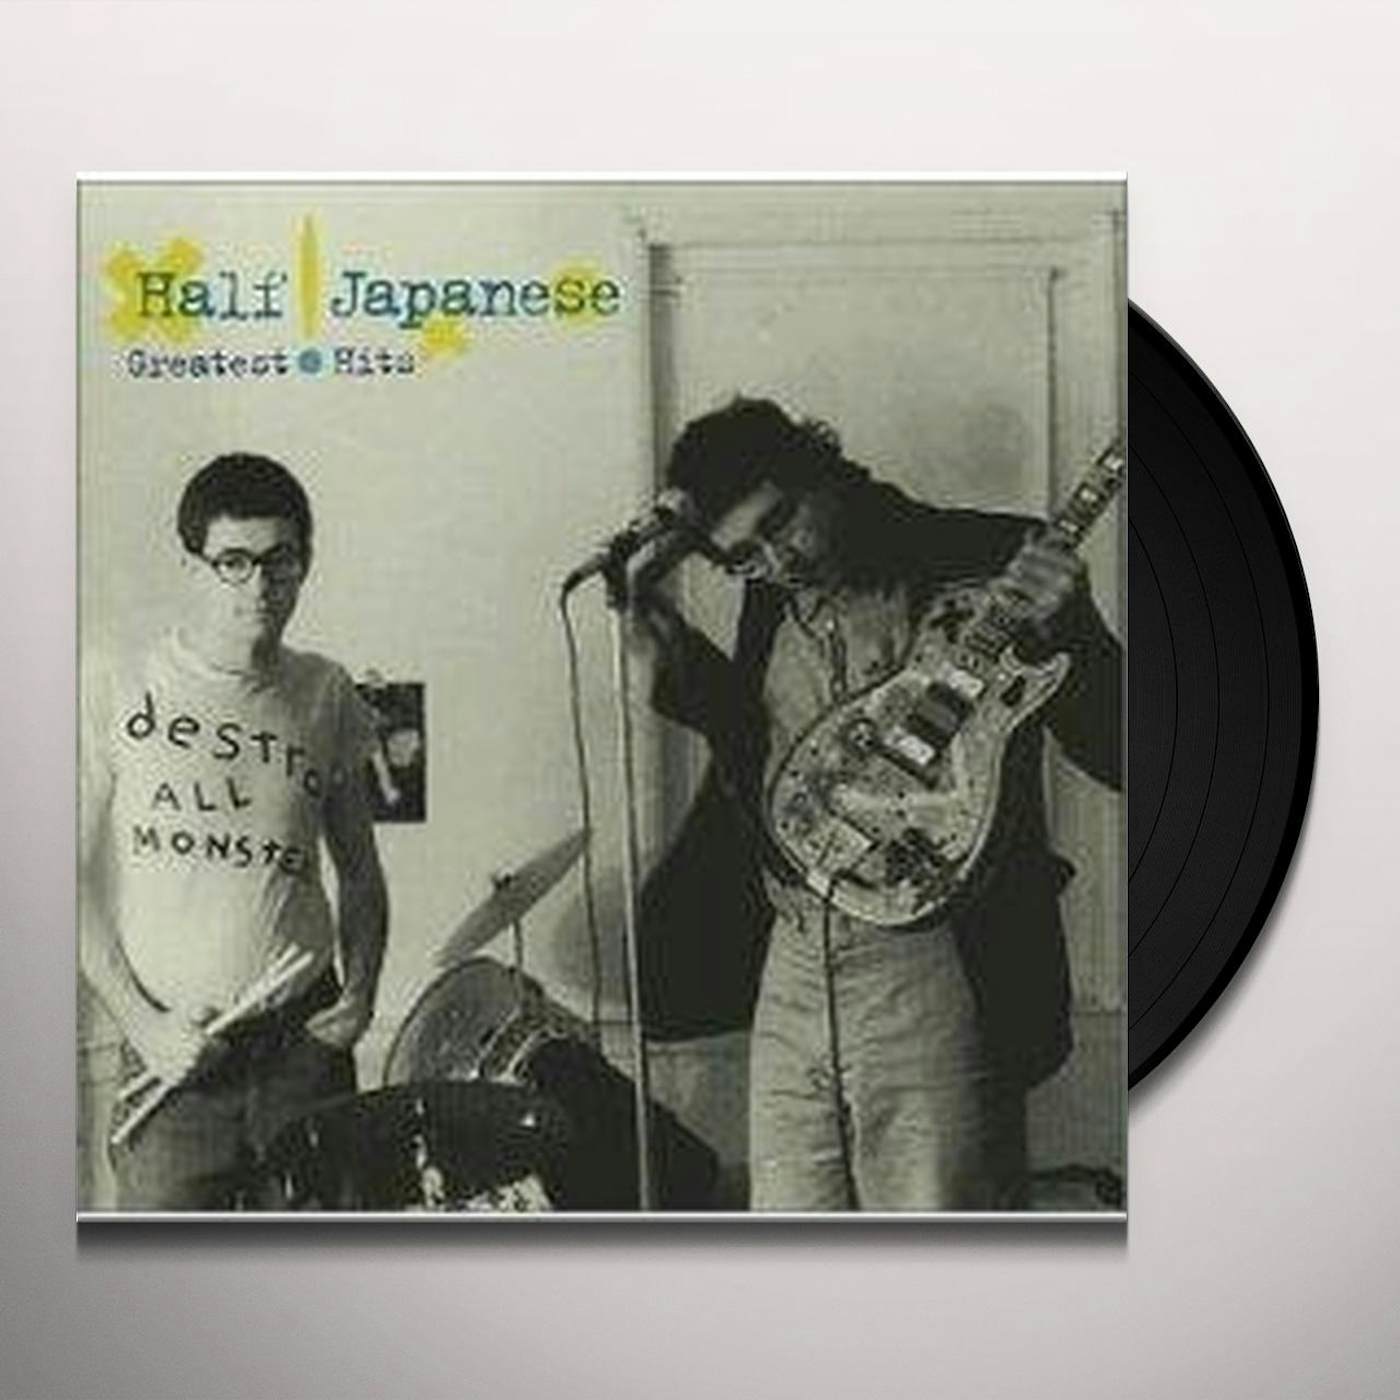 Half Japanese Greatest Hits Vinyl Record